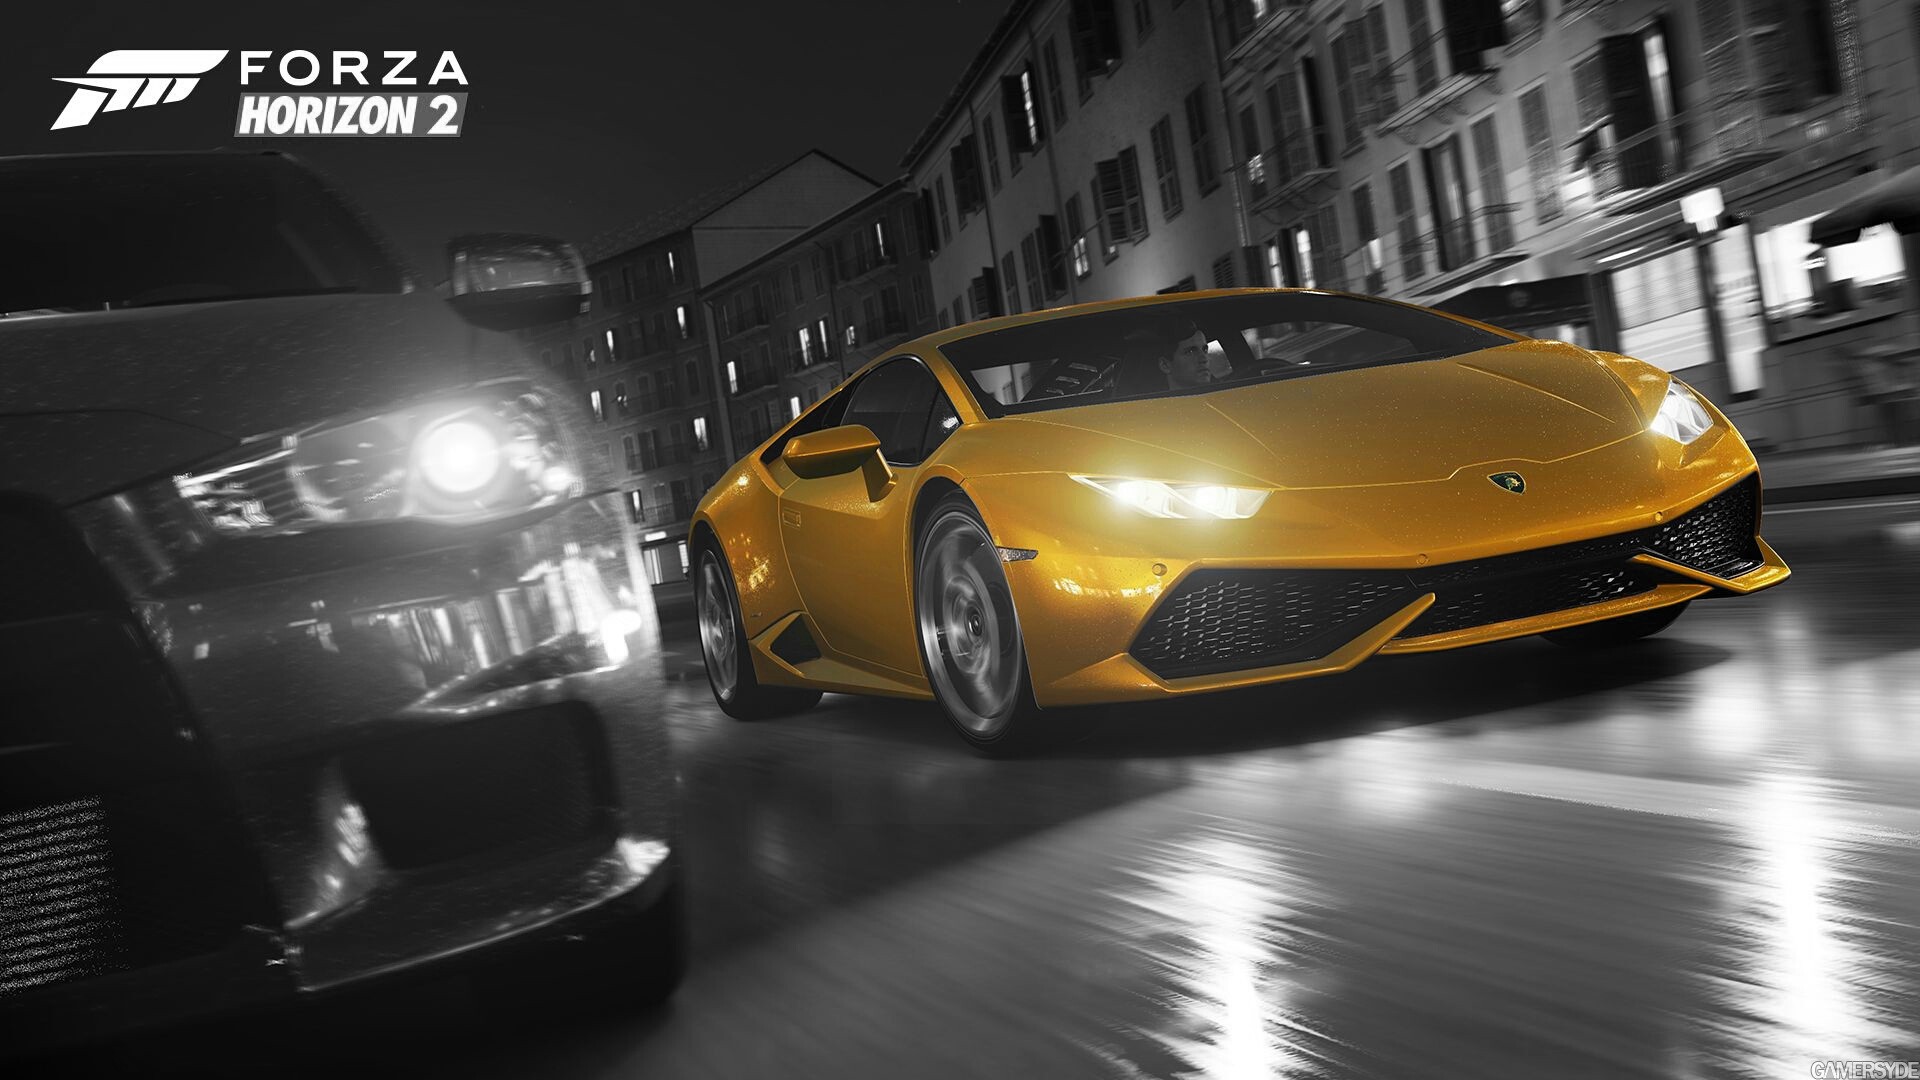 General 1920x1080 Forza Horizon 2 car selective coloring yellow cars Lamborghini vehicle video games racing Turn 10 Studios